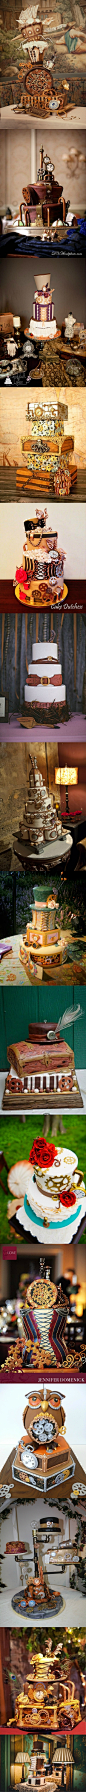 #婚礼布置#机械风潮来袭，蒸汽朋克主题婚礼翻糖蛋糕 更多: http://www.lovewith.me/share/detail/all/32403